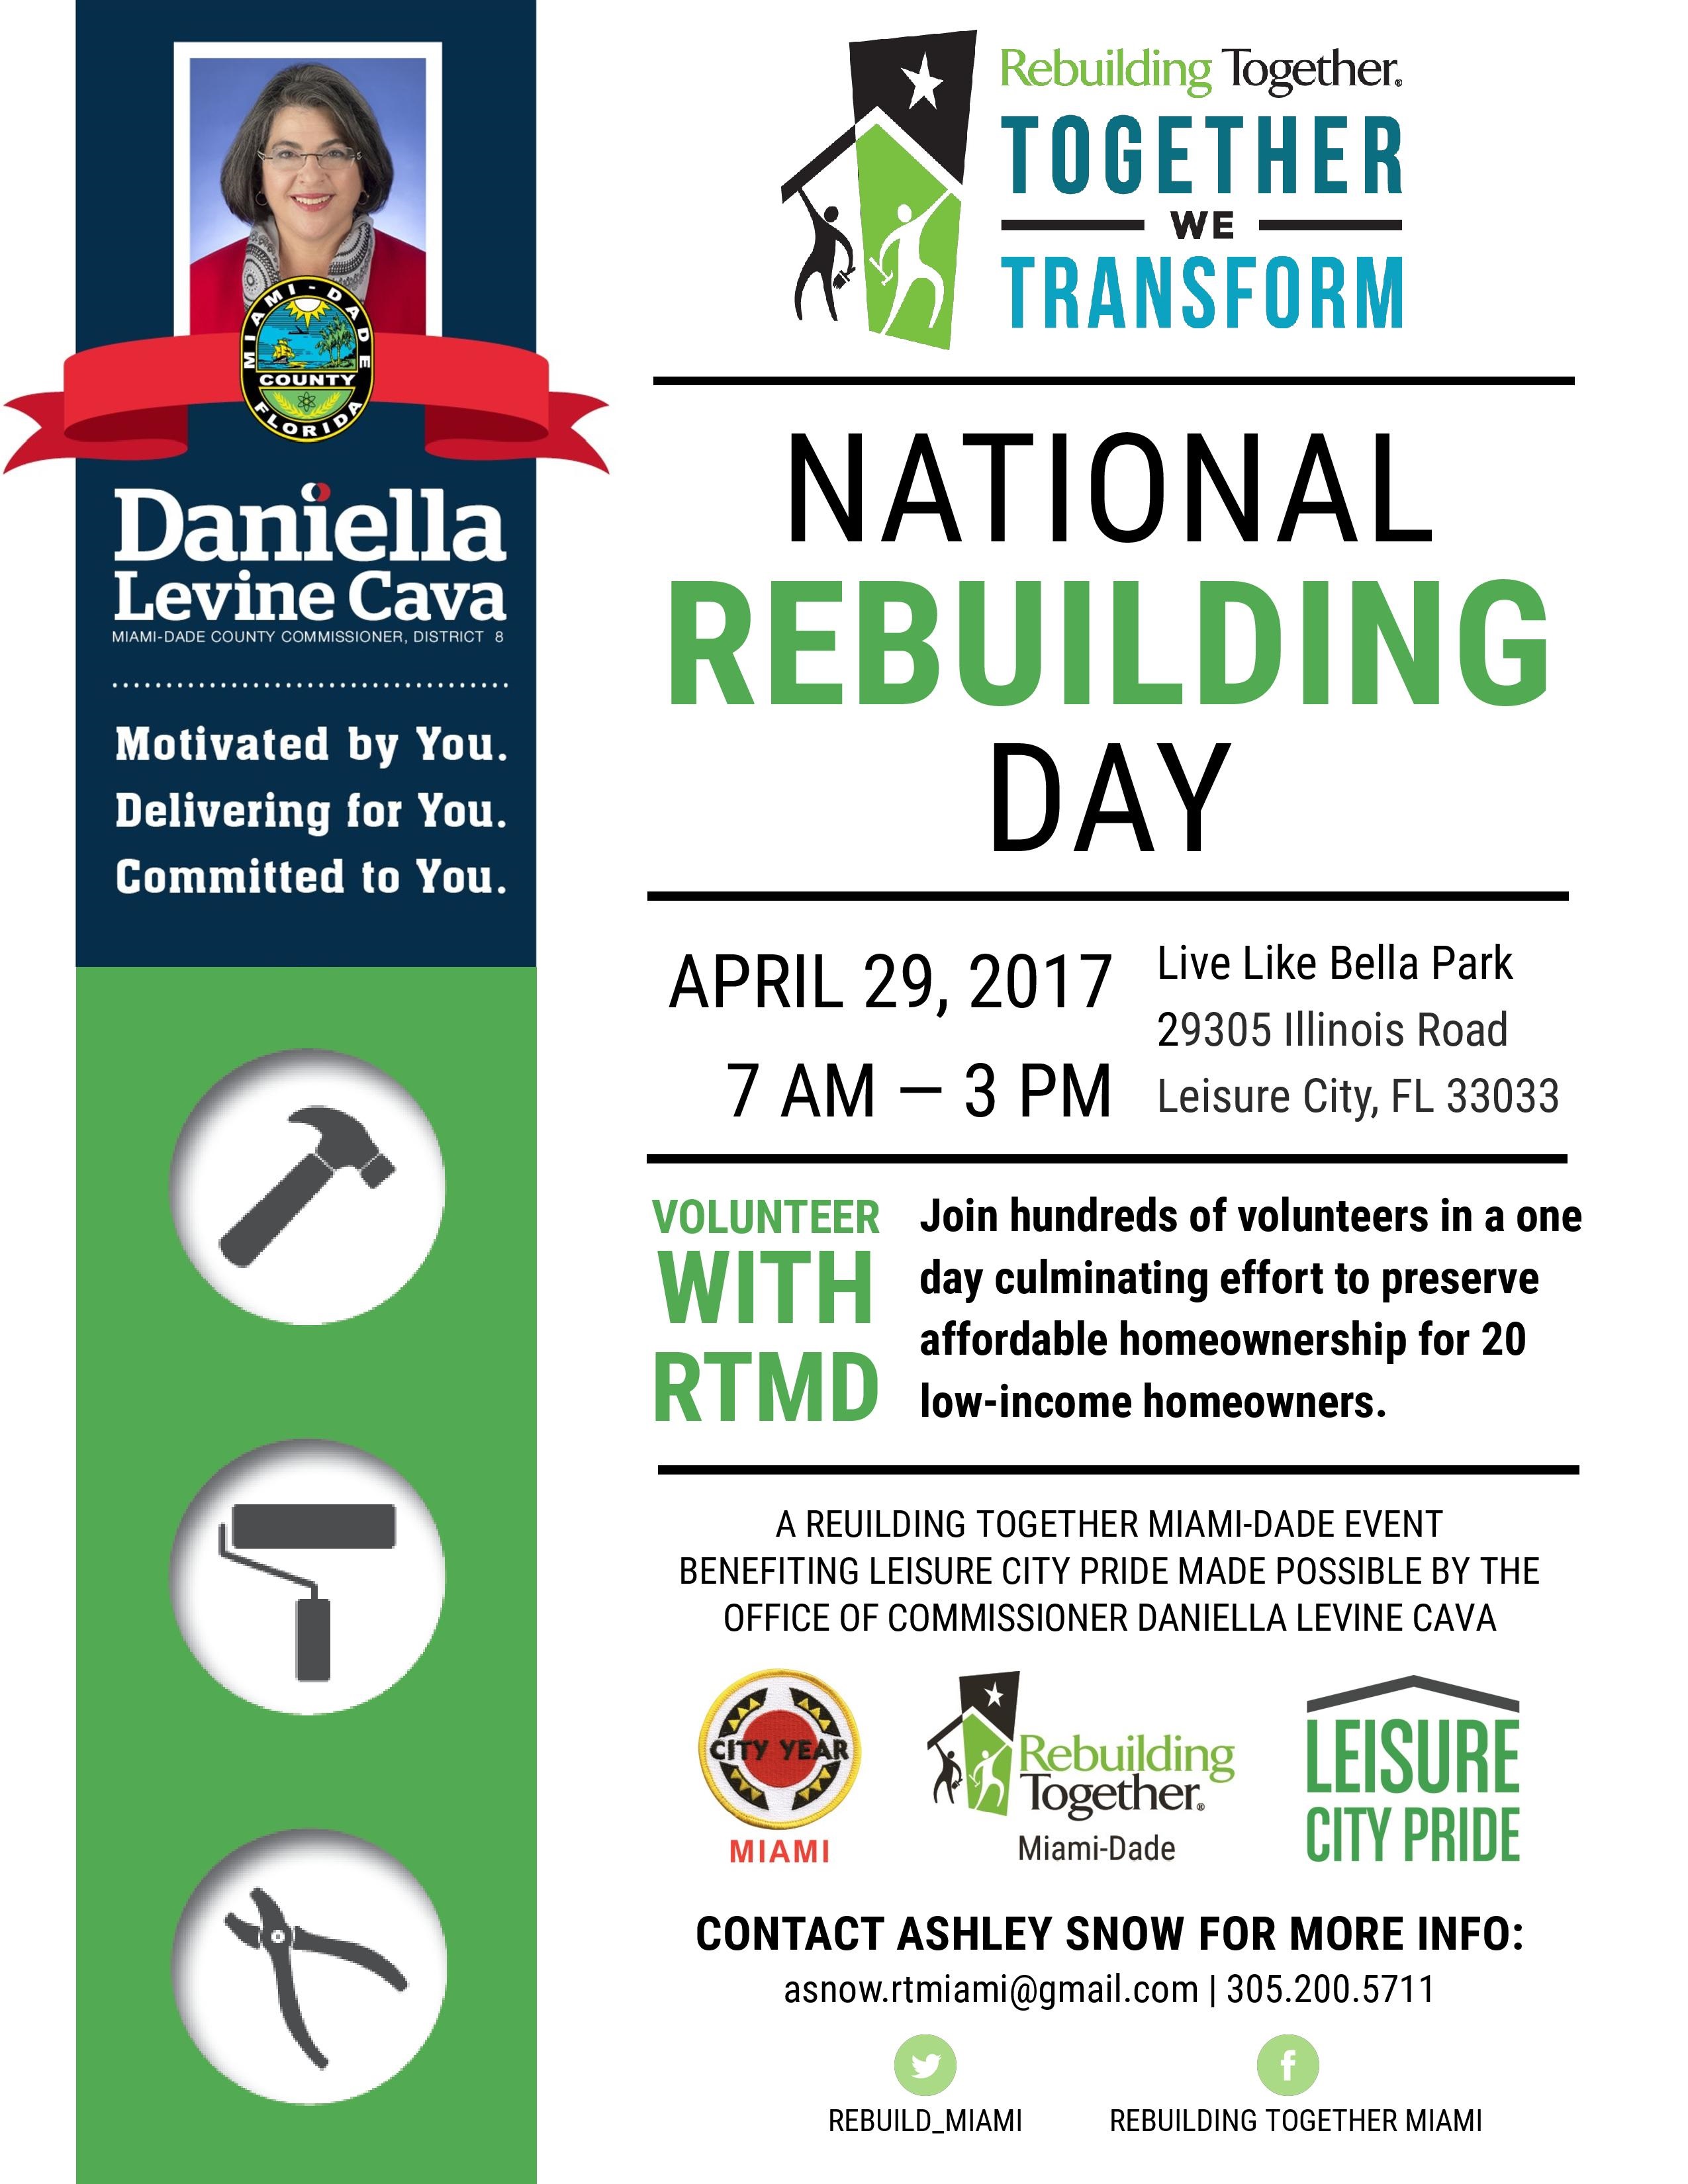 National Rebuilding Day poster